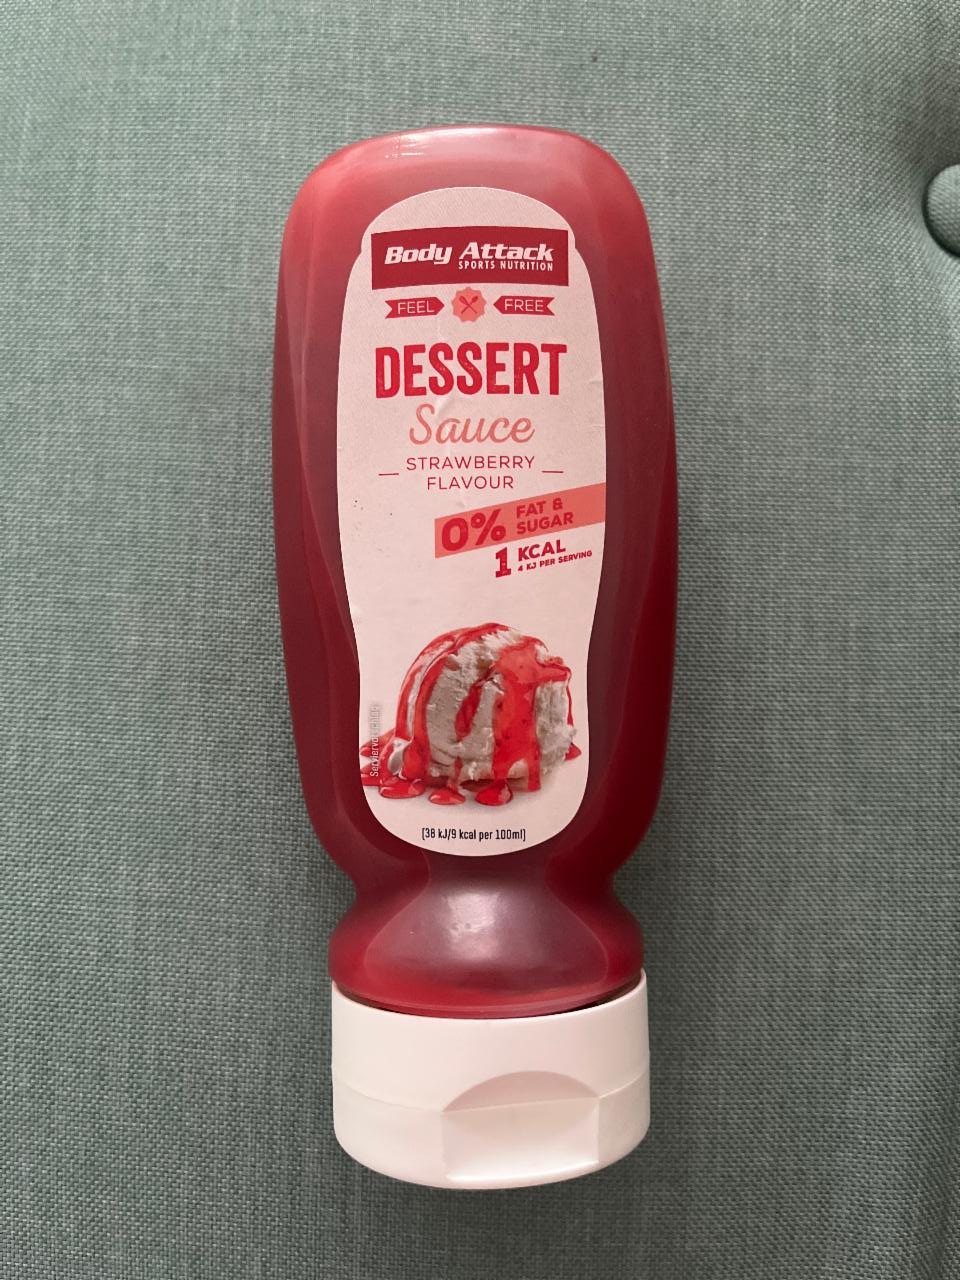 Fotografie - Dessert Sauce Strawberry Body Attack